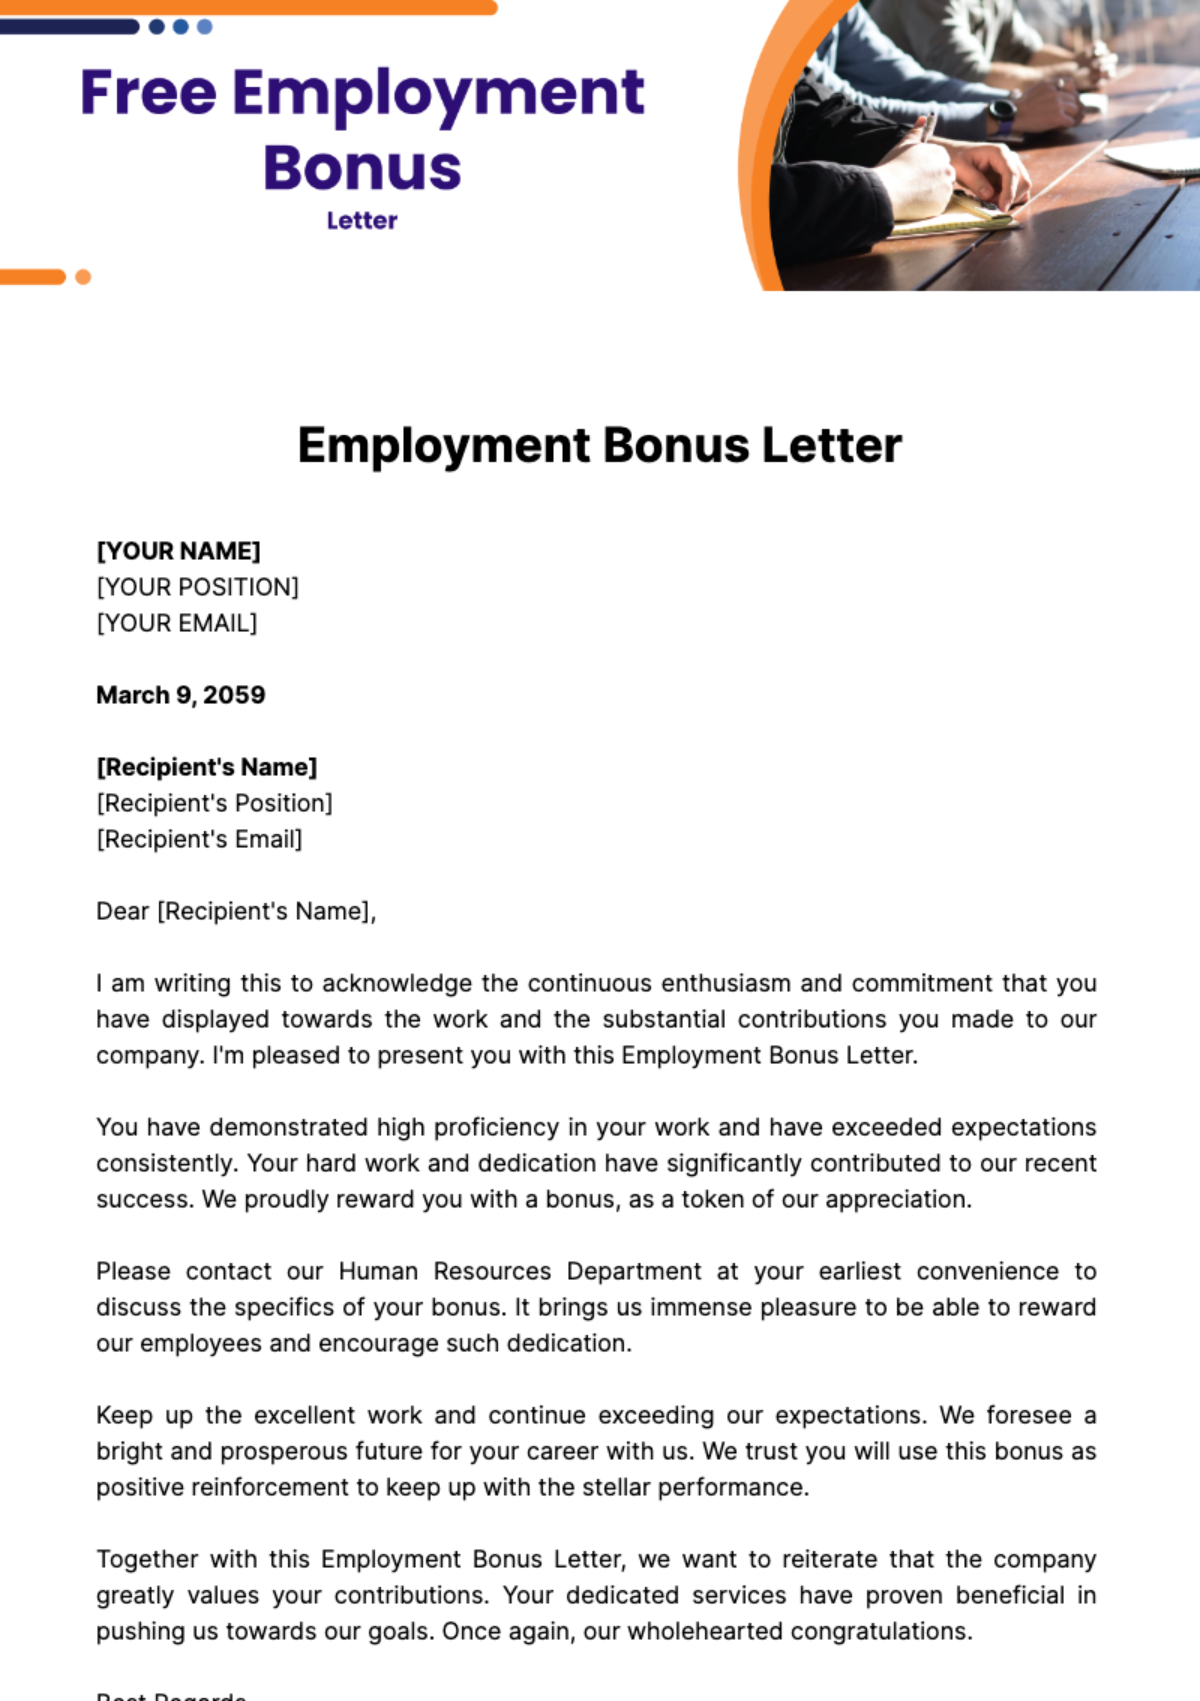 Free Employment Bonus Letter Template